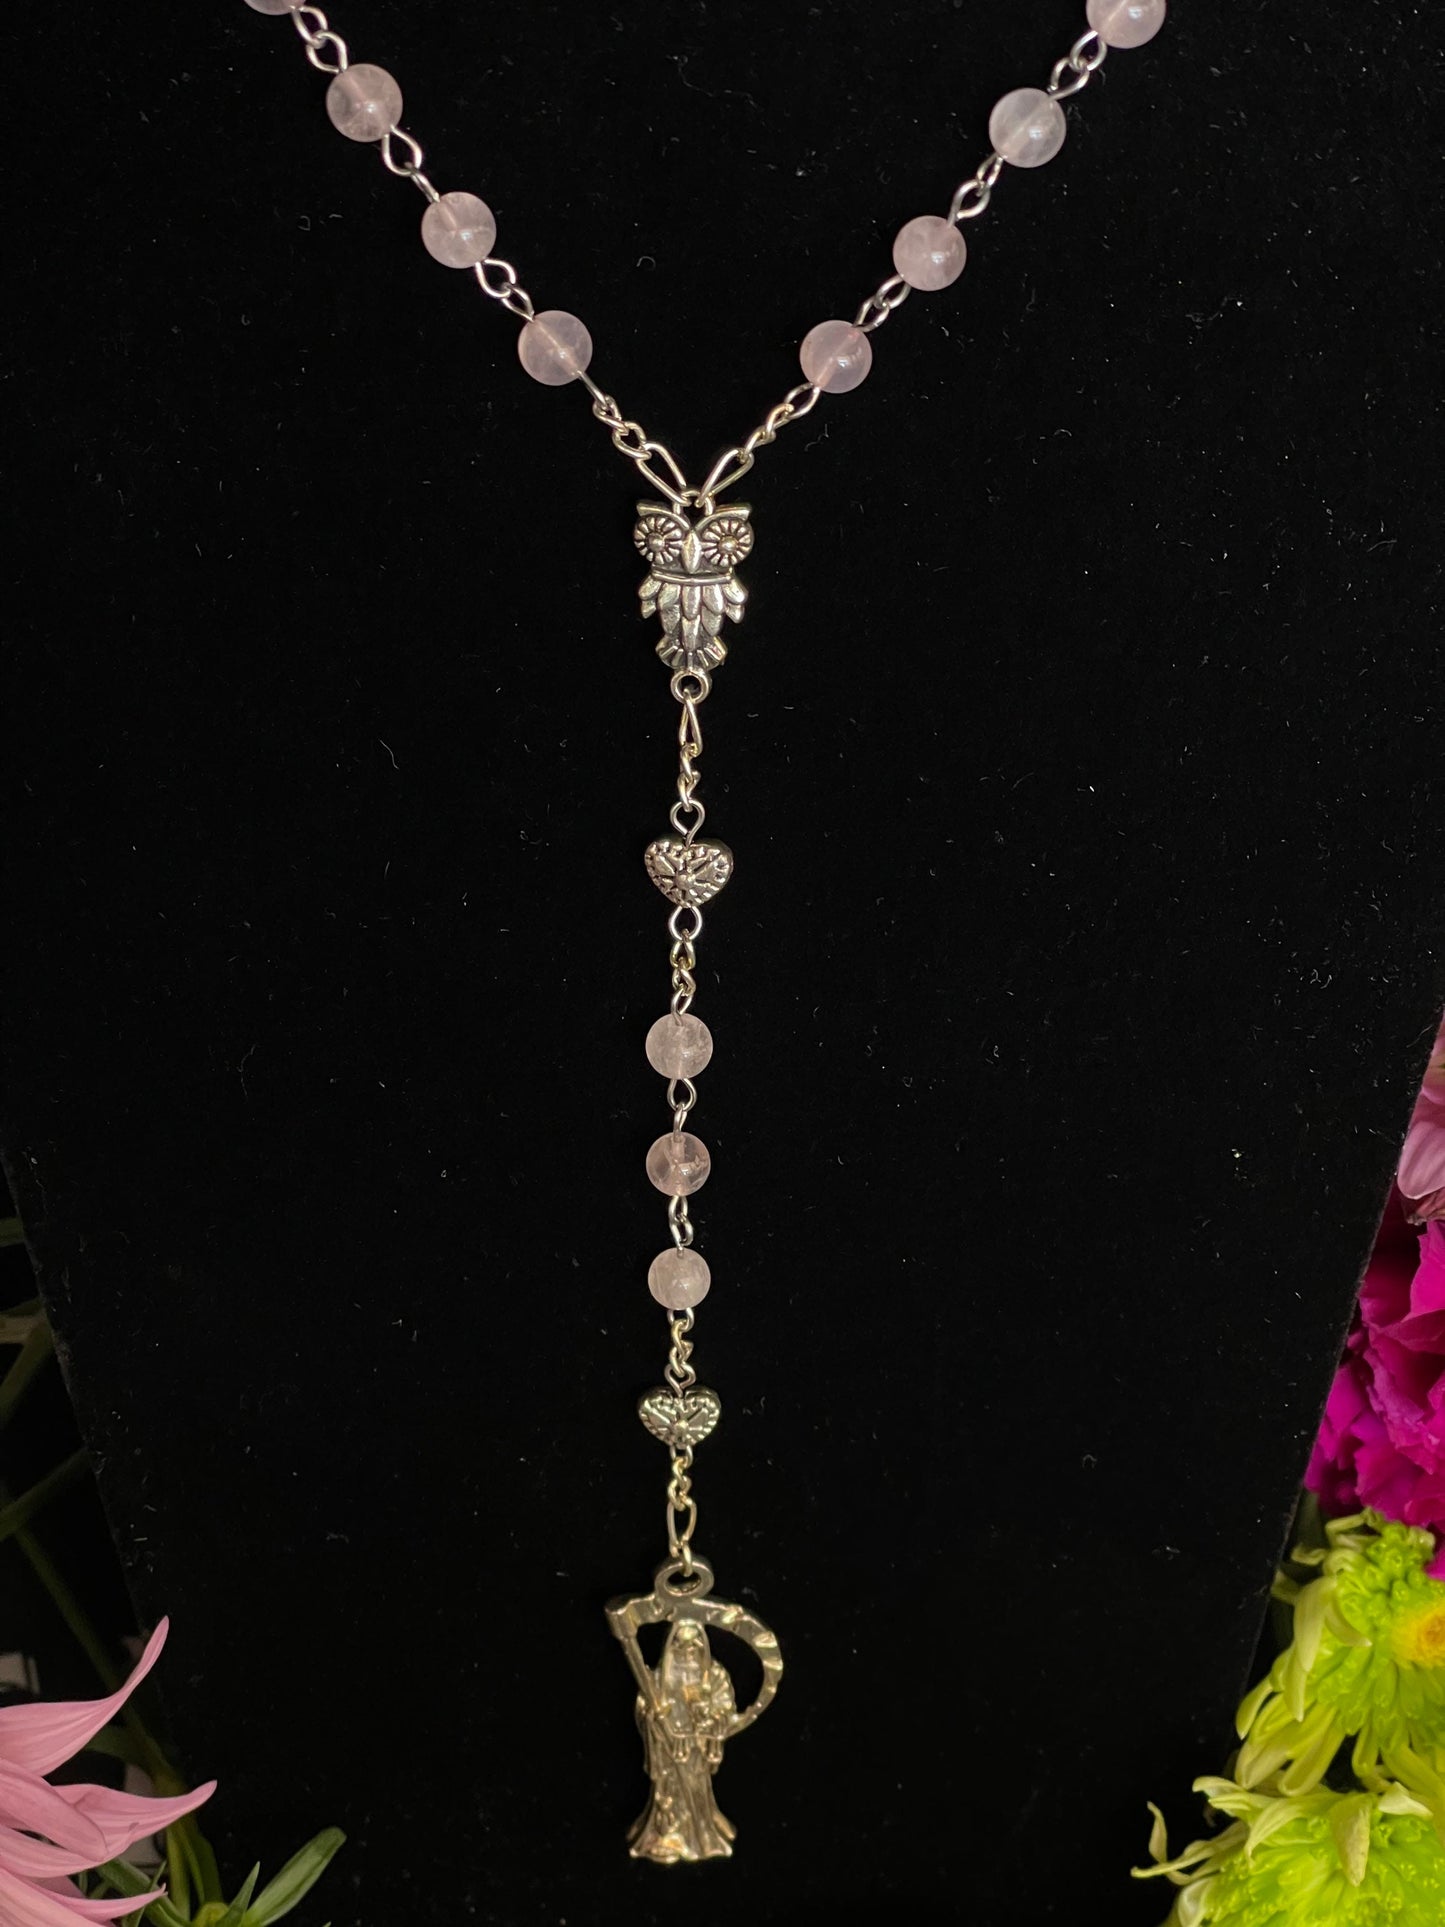 Santa Muerte Rosada Rose Quartz / Pink Rosary + Transparent + Sterling Silver Plated Chain + Handcrafted + Gemstone + Rosario